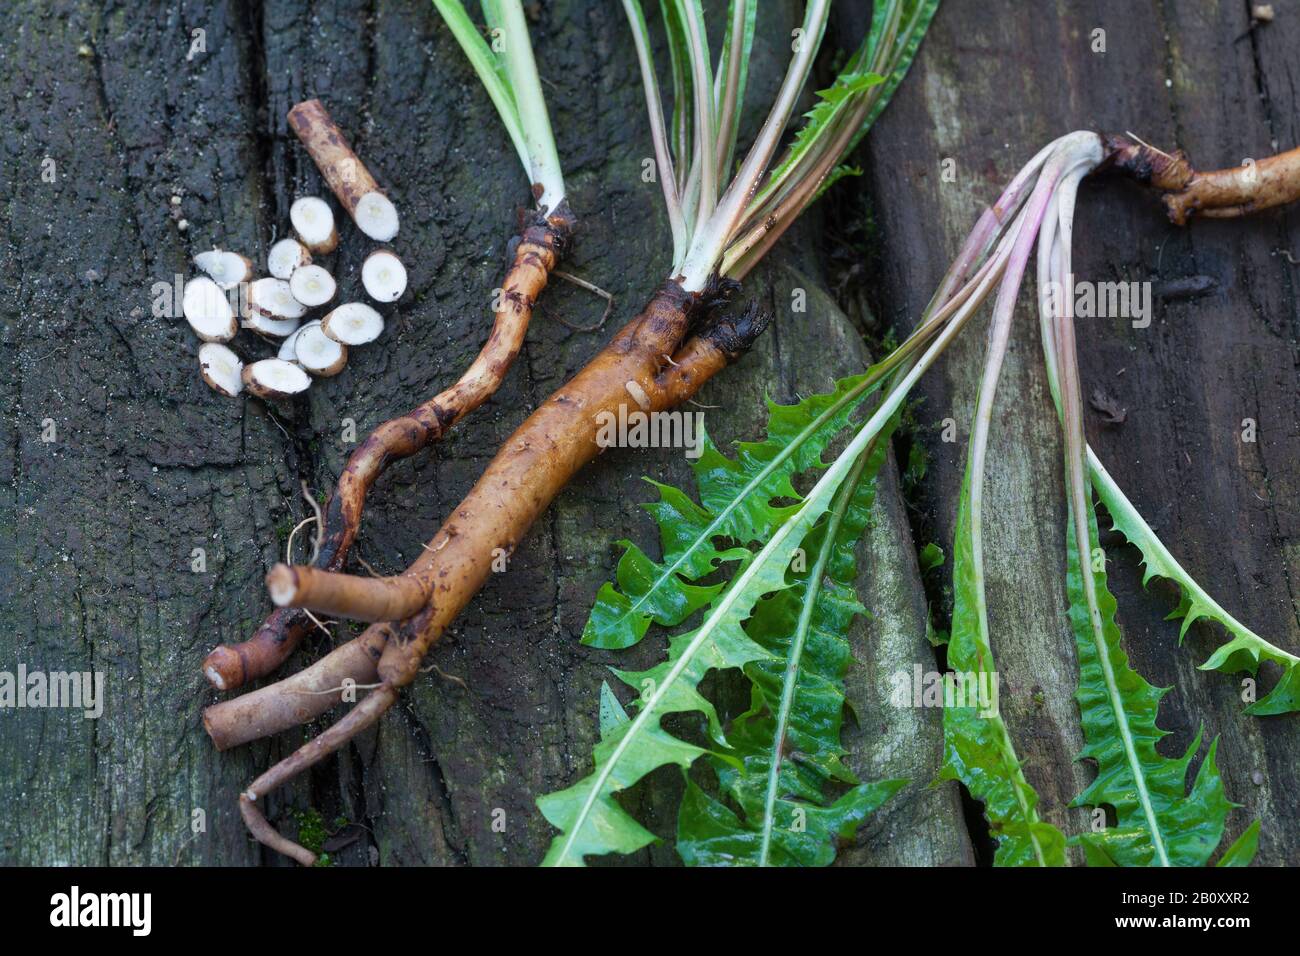 common dandelion (Taraxacum officinale), collected dandelion roots, Germany Stock Photo